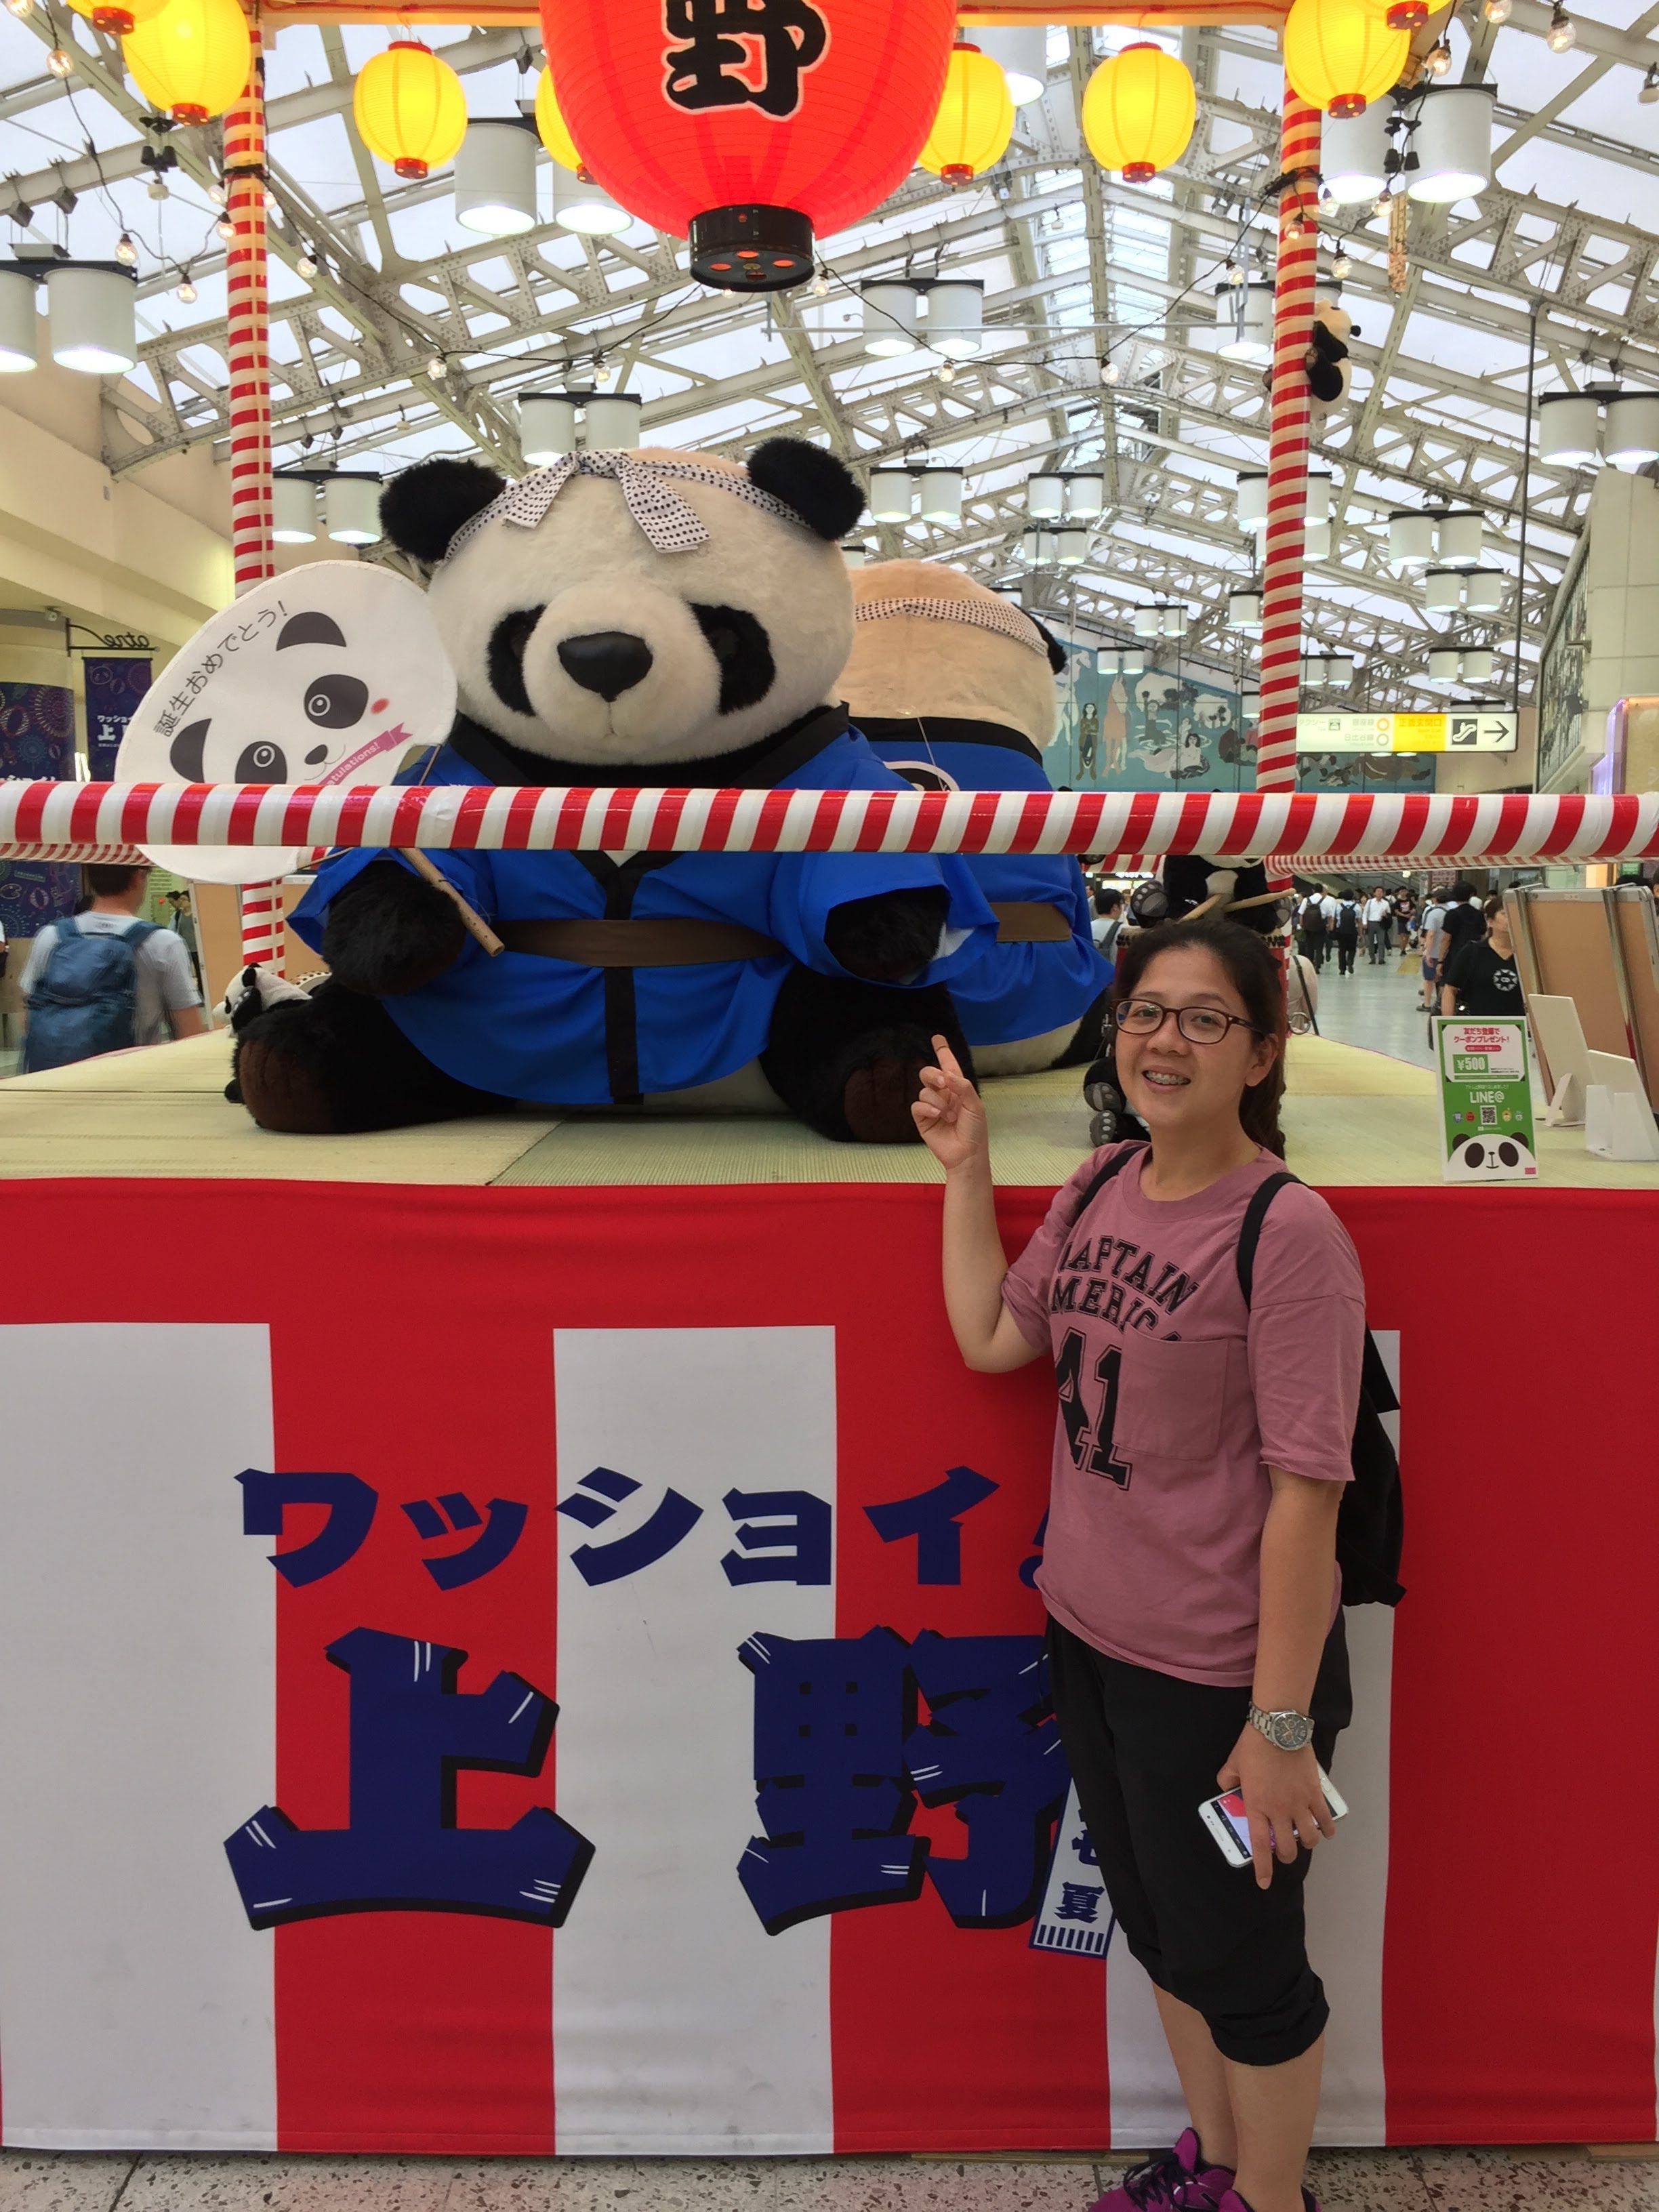 Berfoto dengan boneka panda di station ueno menuju ke station shibuya